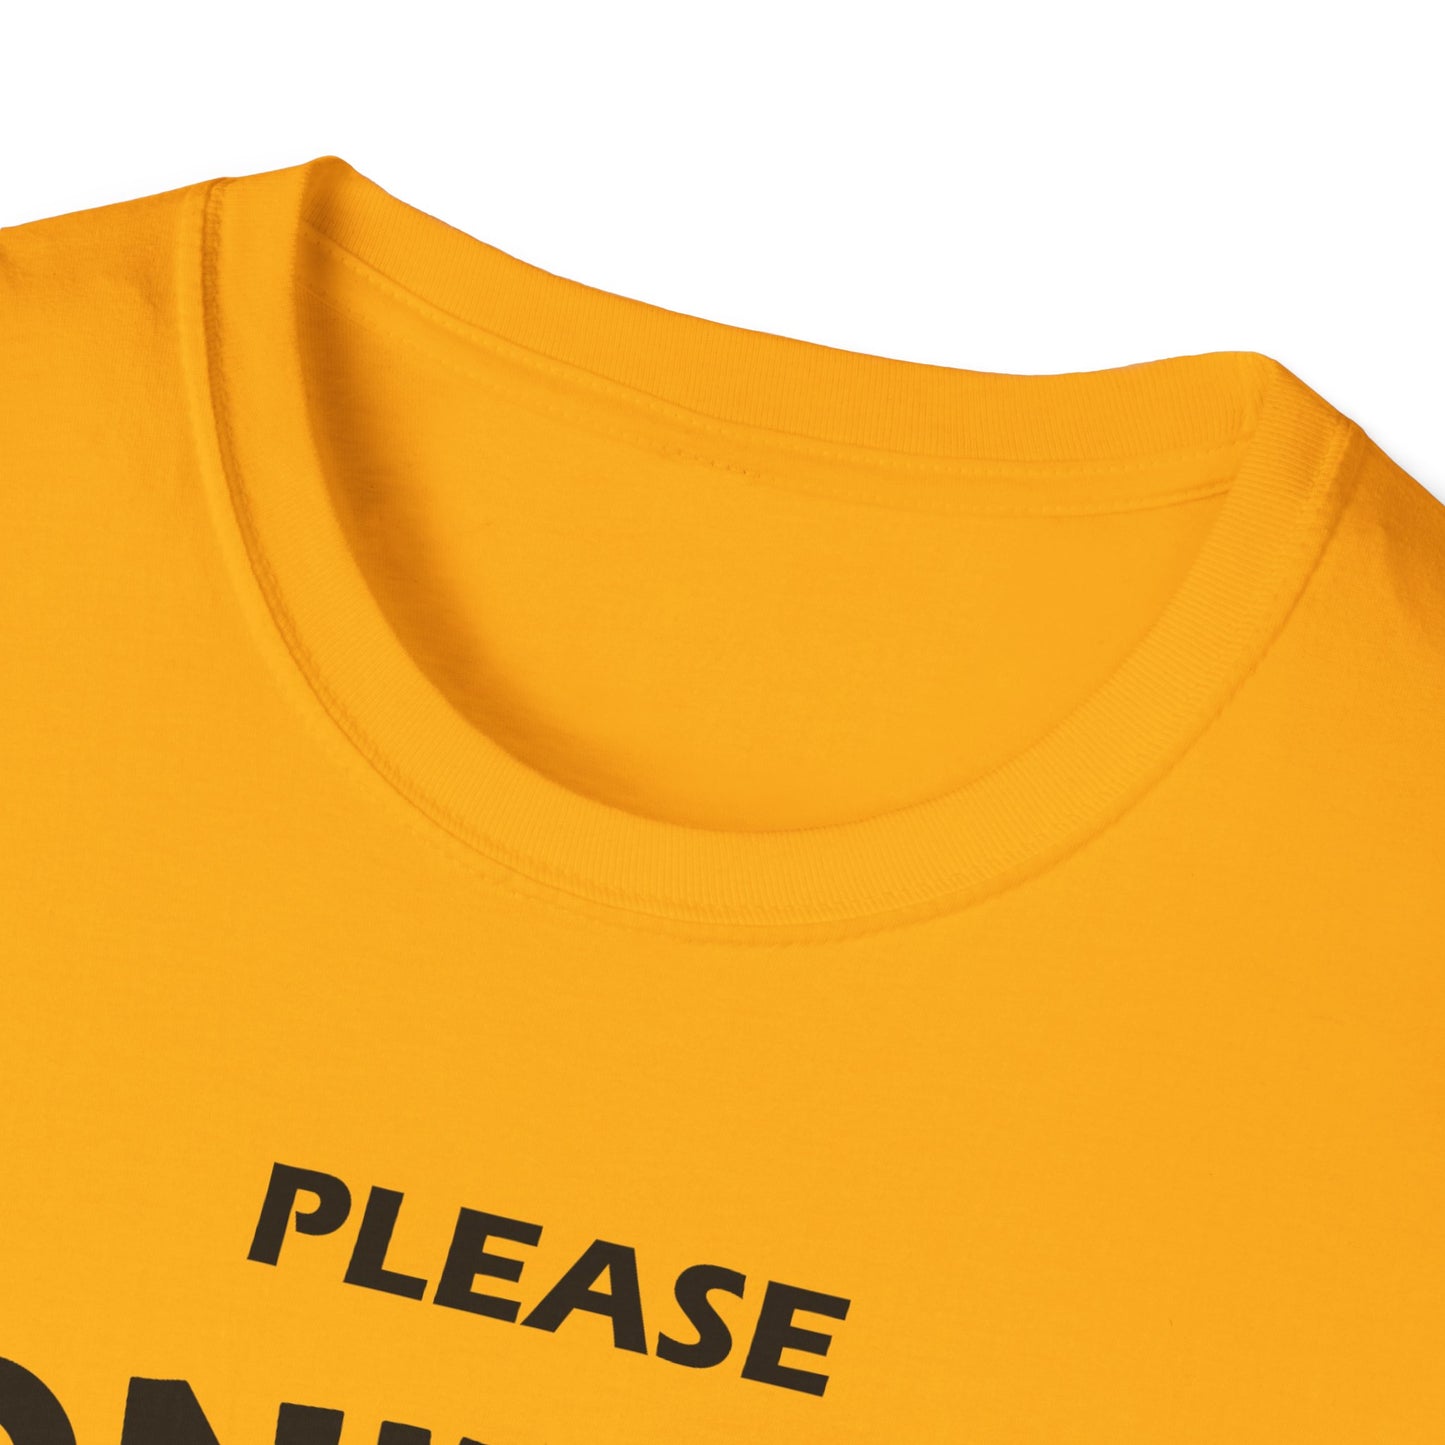 Please Don't Kill My Rogue - Black - Unisex Softstyle T-Shirt